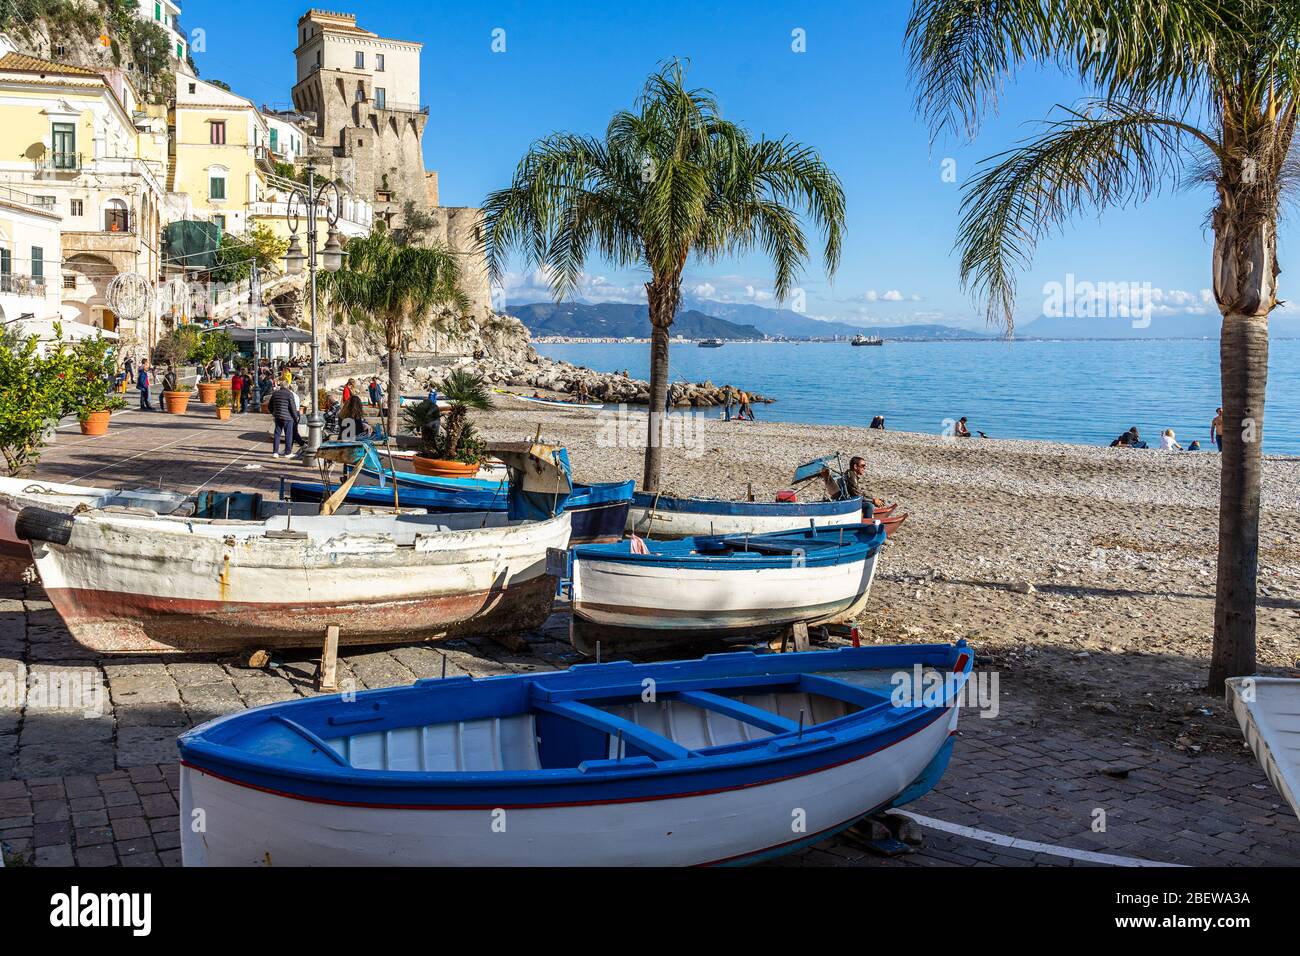 Colorful fishing boats at Cetara beach, a small town on the Amalfi Coast famous for the “colatura di alici” fish sauce, Campania, Italy Stock Photo